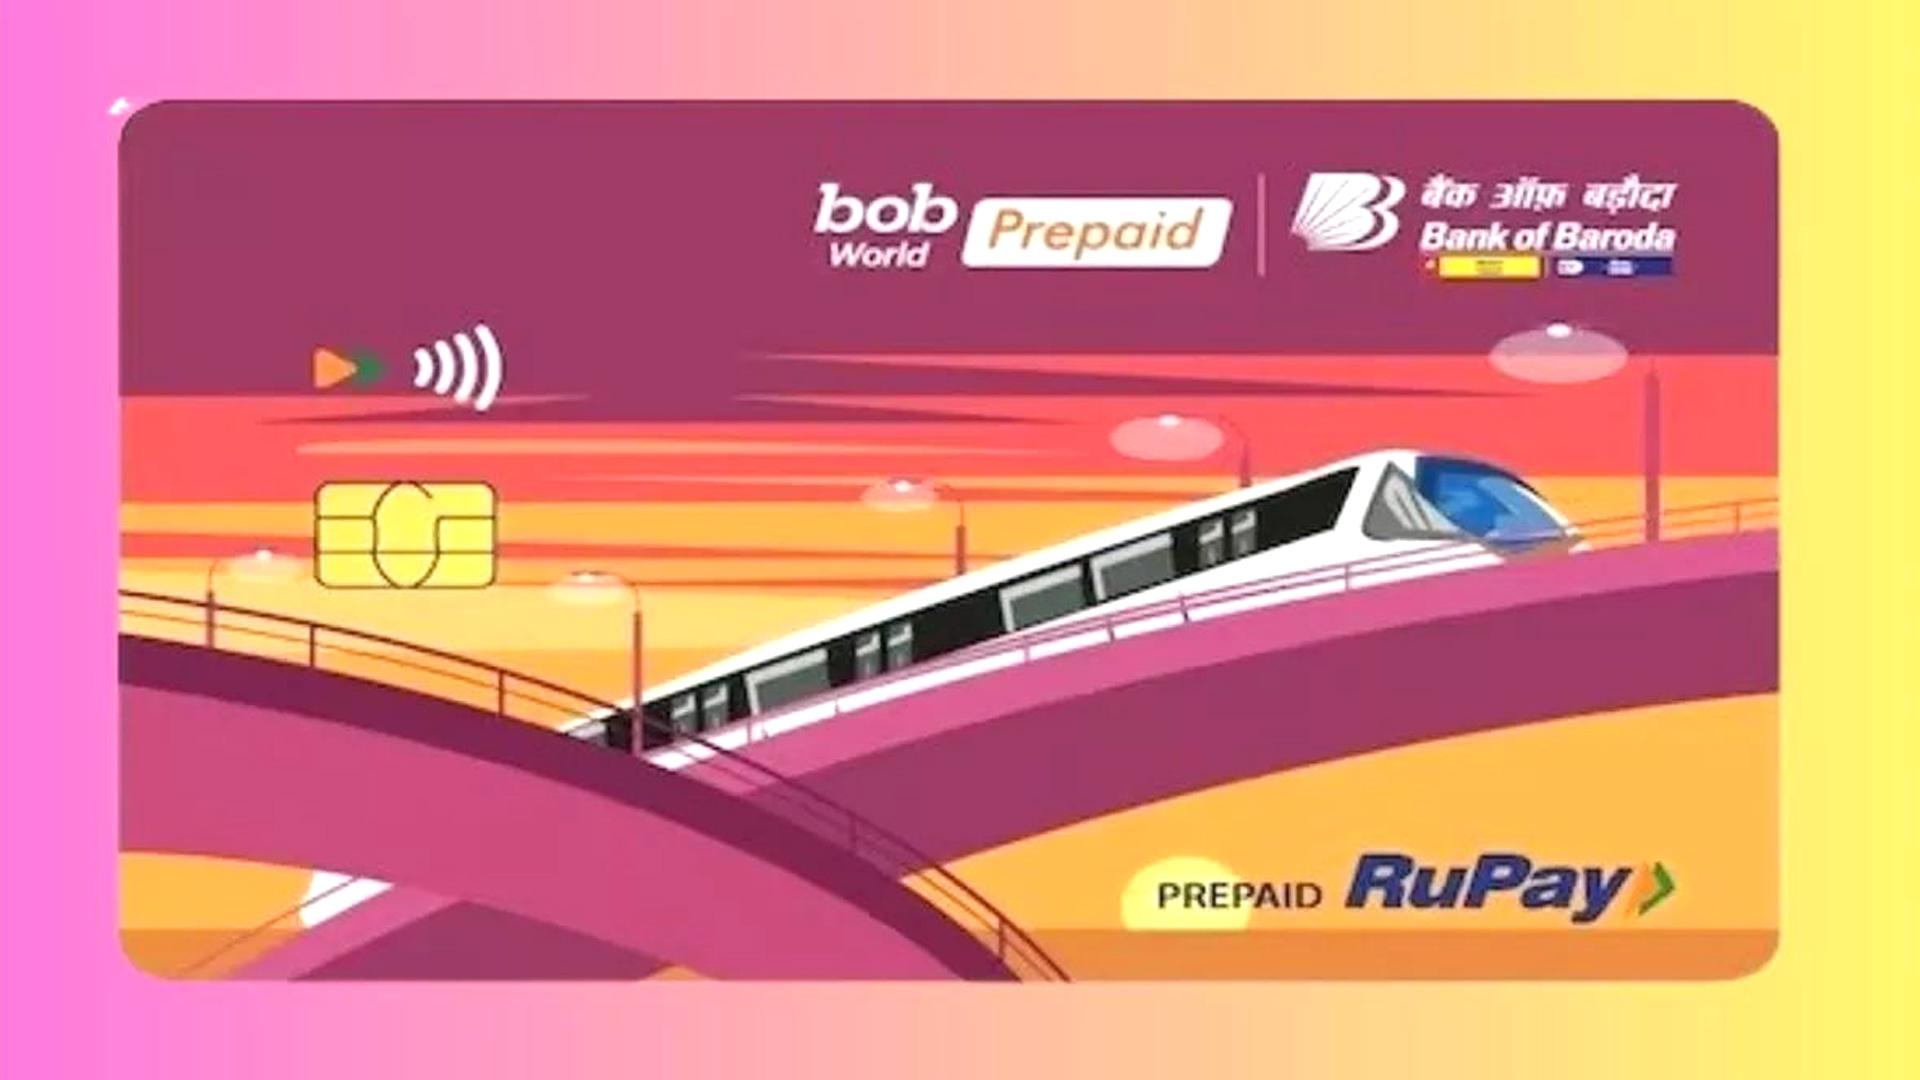 Bank of Baroda Introduces RuPay Card for Public Transportation